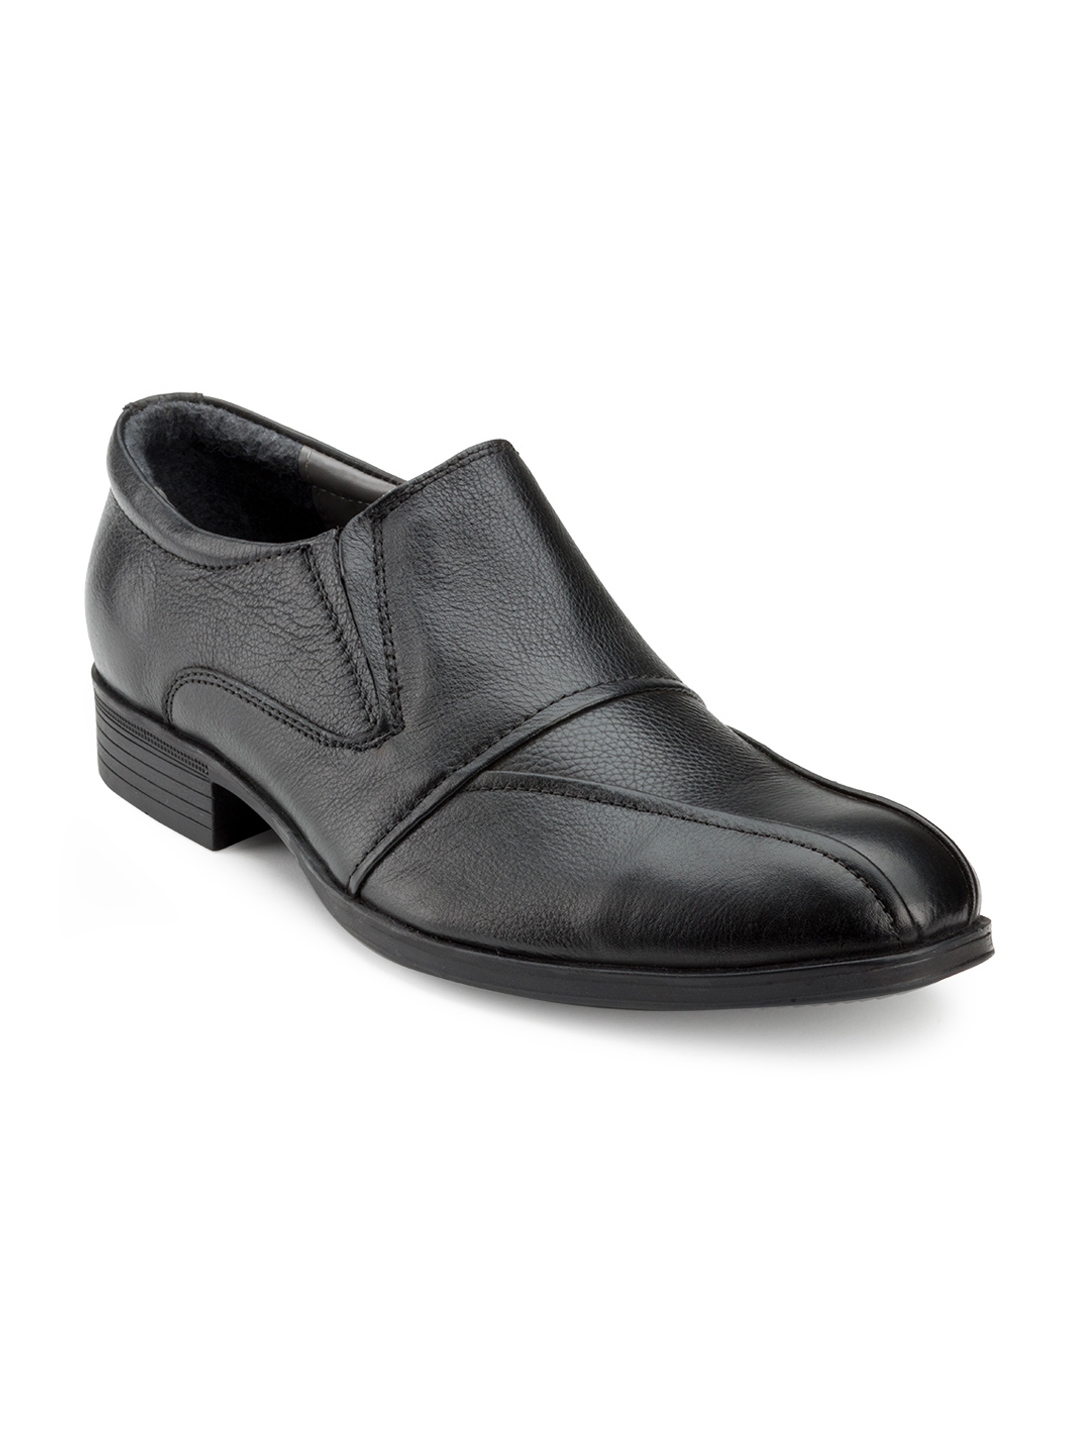 escaro men's formal shoes